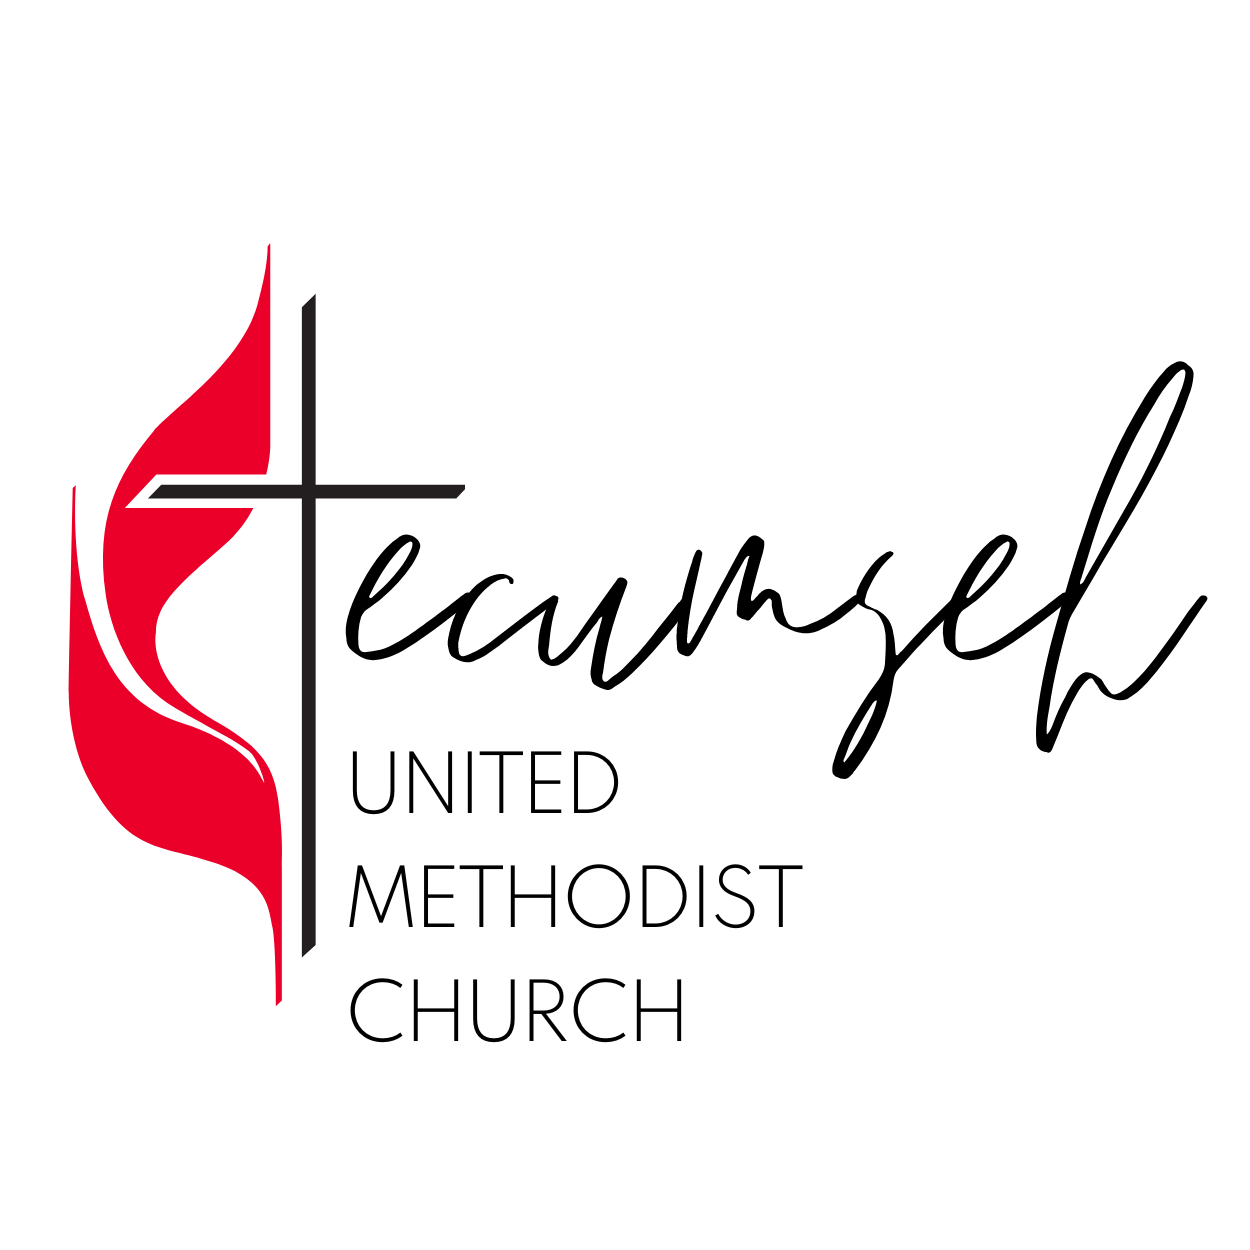 This Sunday, February 11th, is - Tecumseh United Church